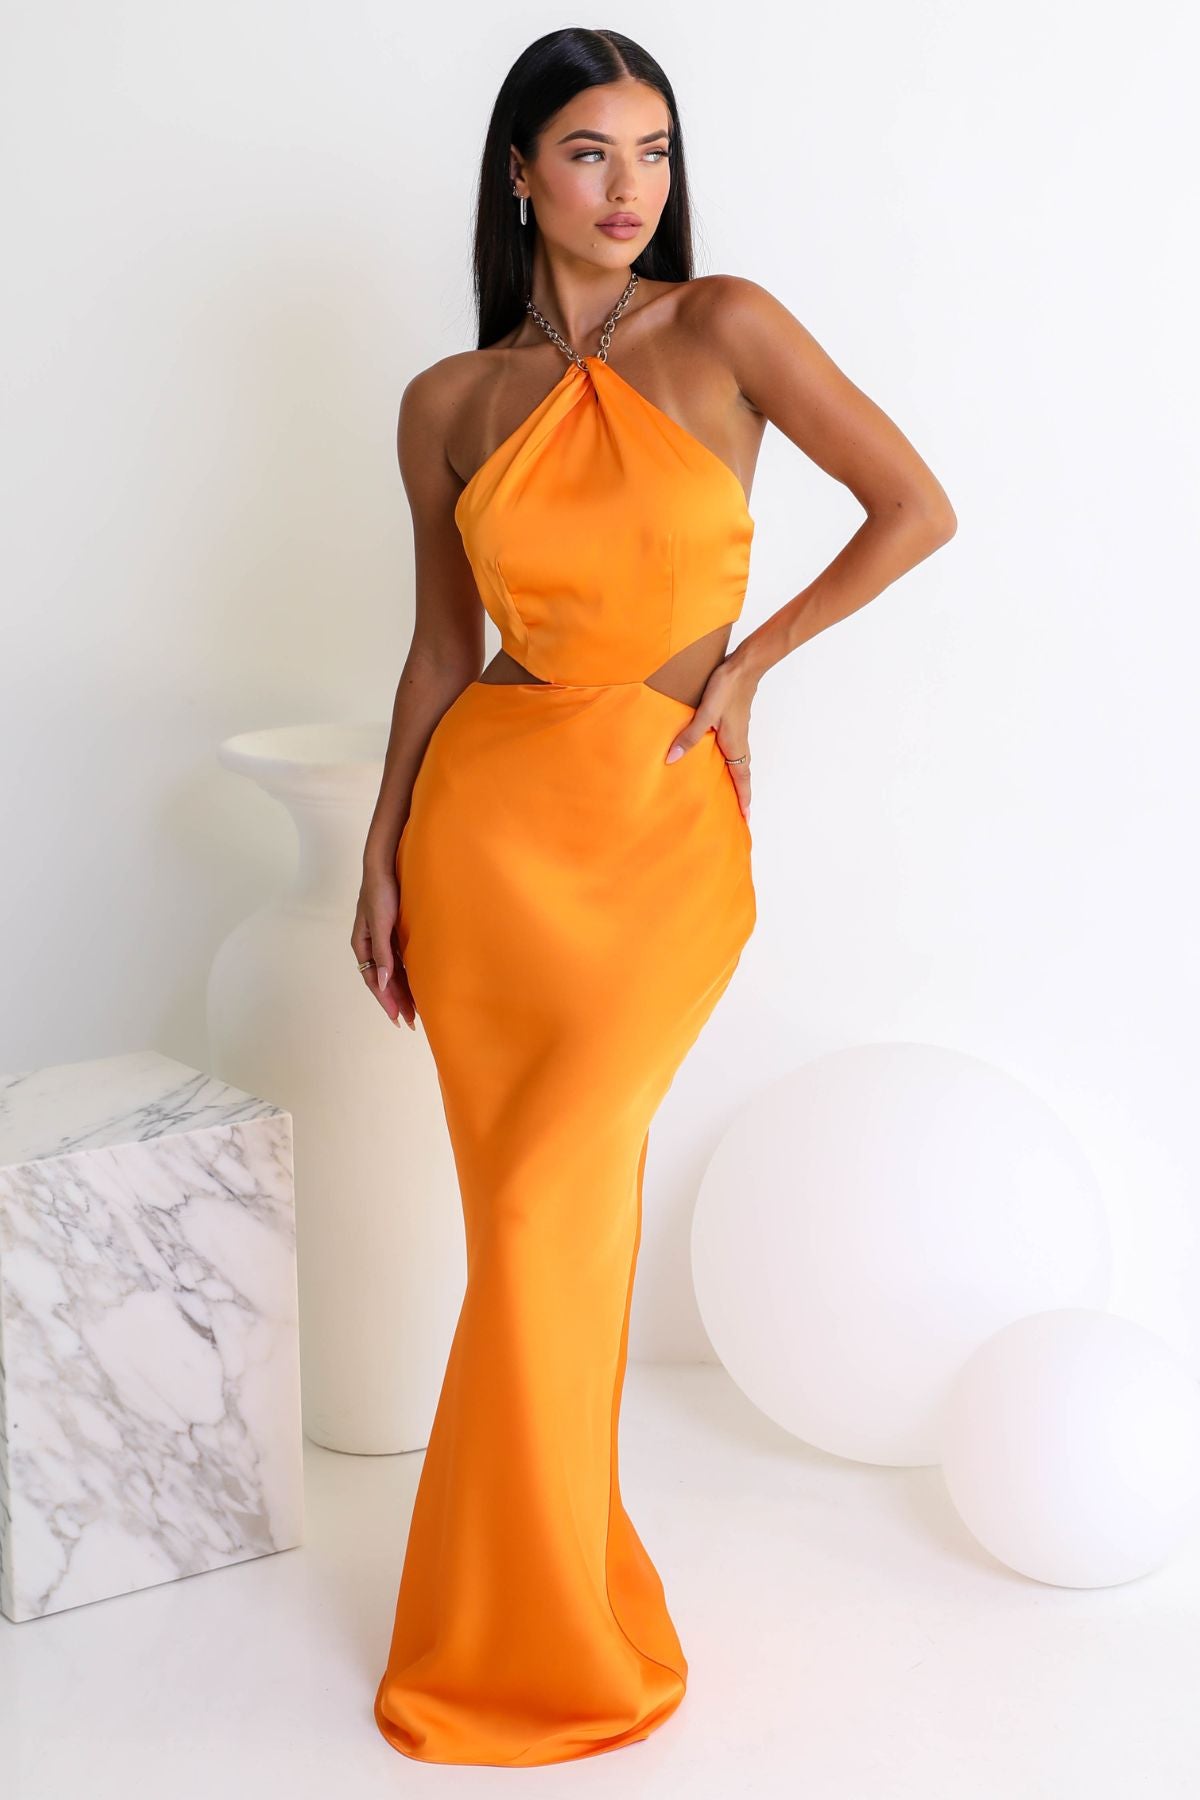 Lexi LEXI Morena Dress (Mango Orange) - RRP $379 - 2_e7667078-1169-44e7-9f5e-8483885f29e7.jpg